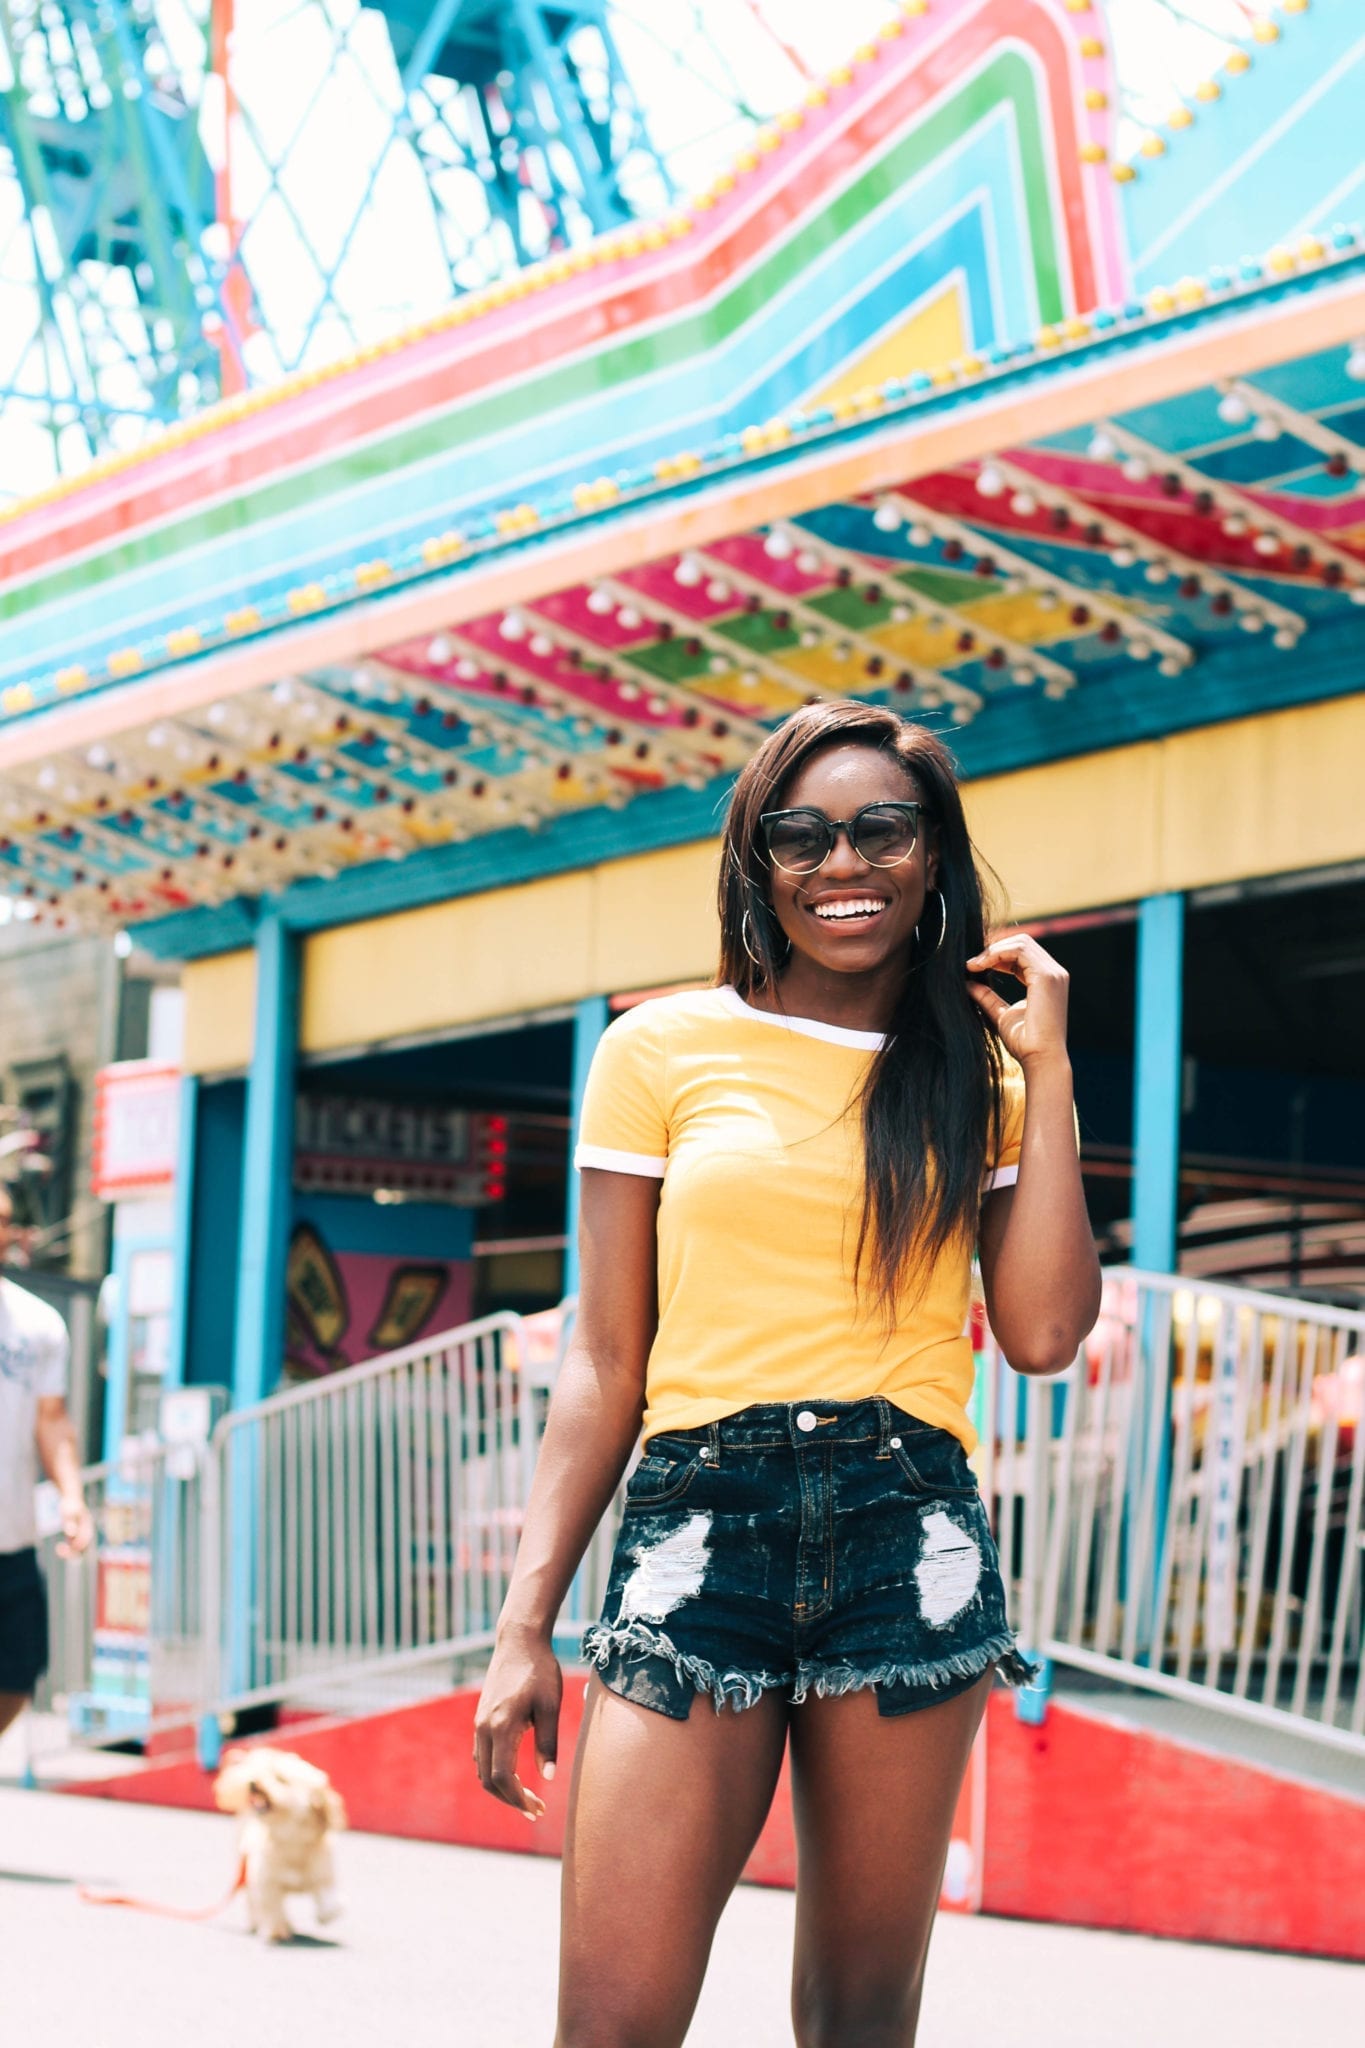 23 reasons why you should start a blog // Coney island photo shoot at Luna Park